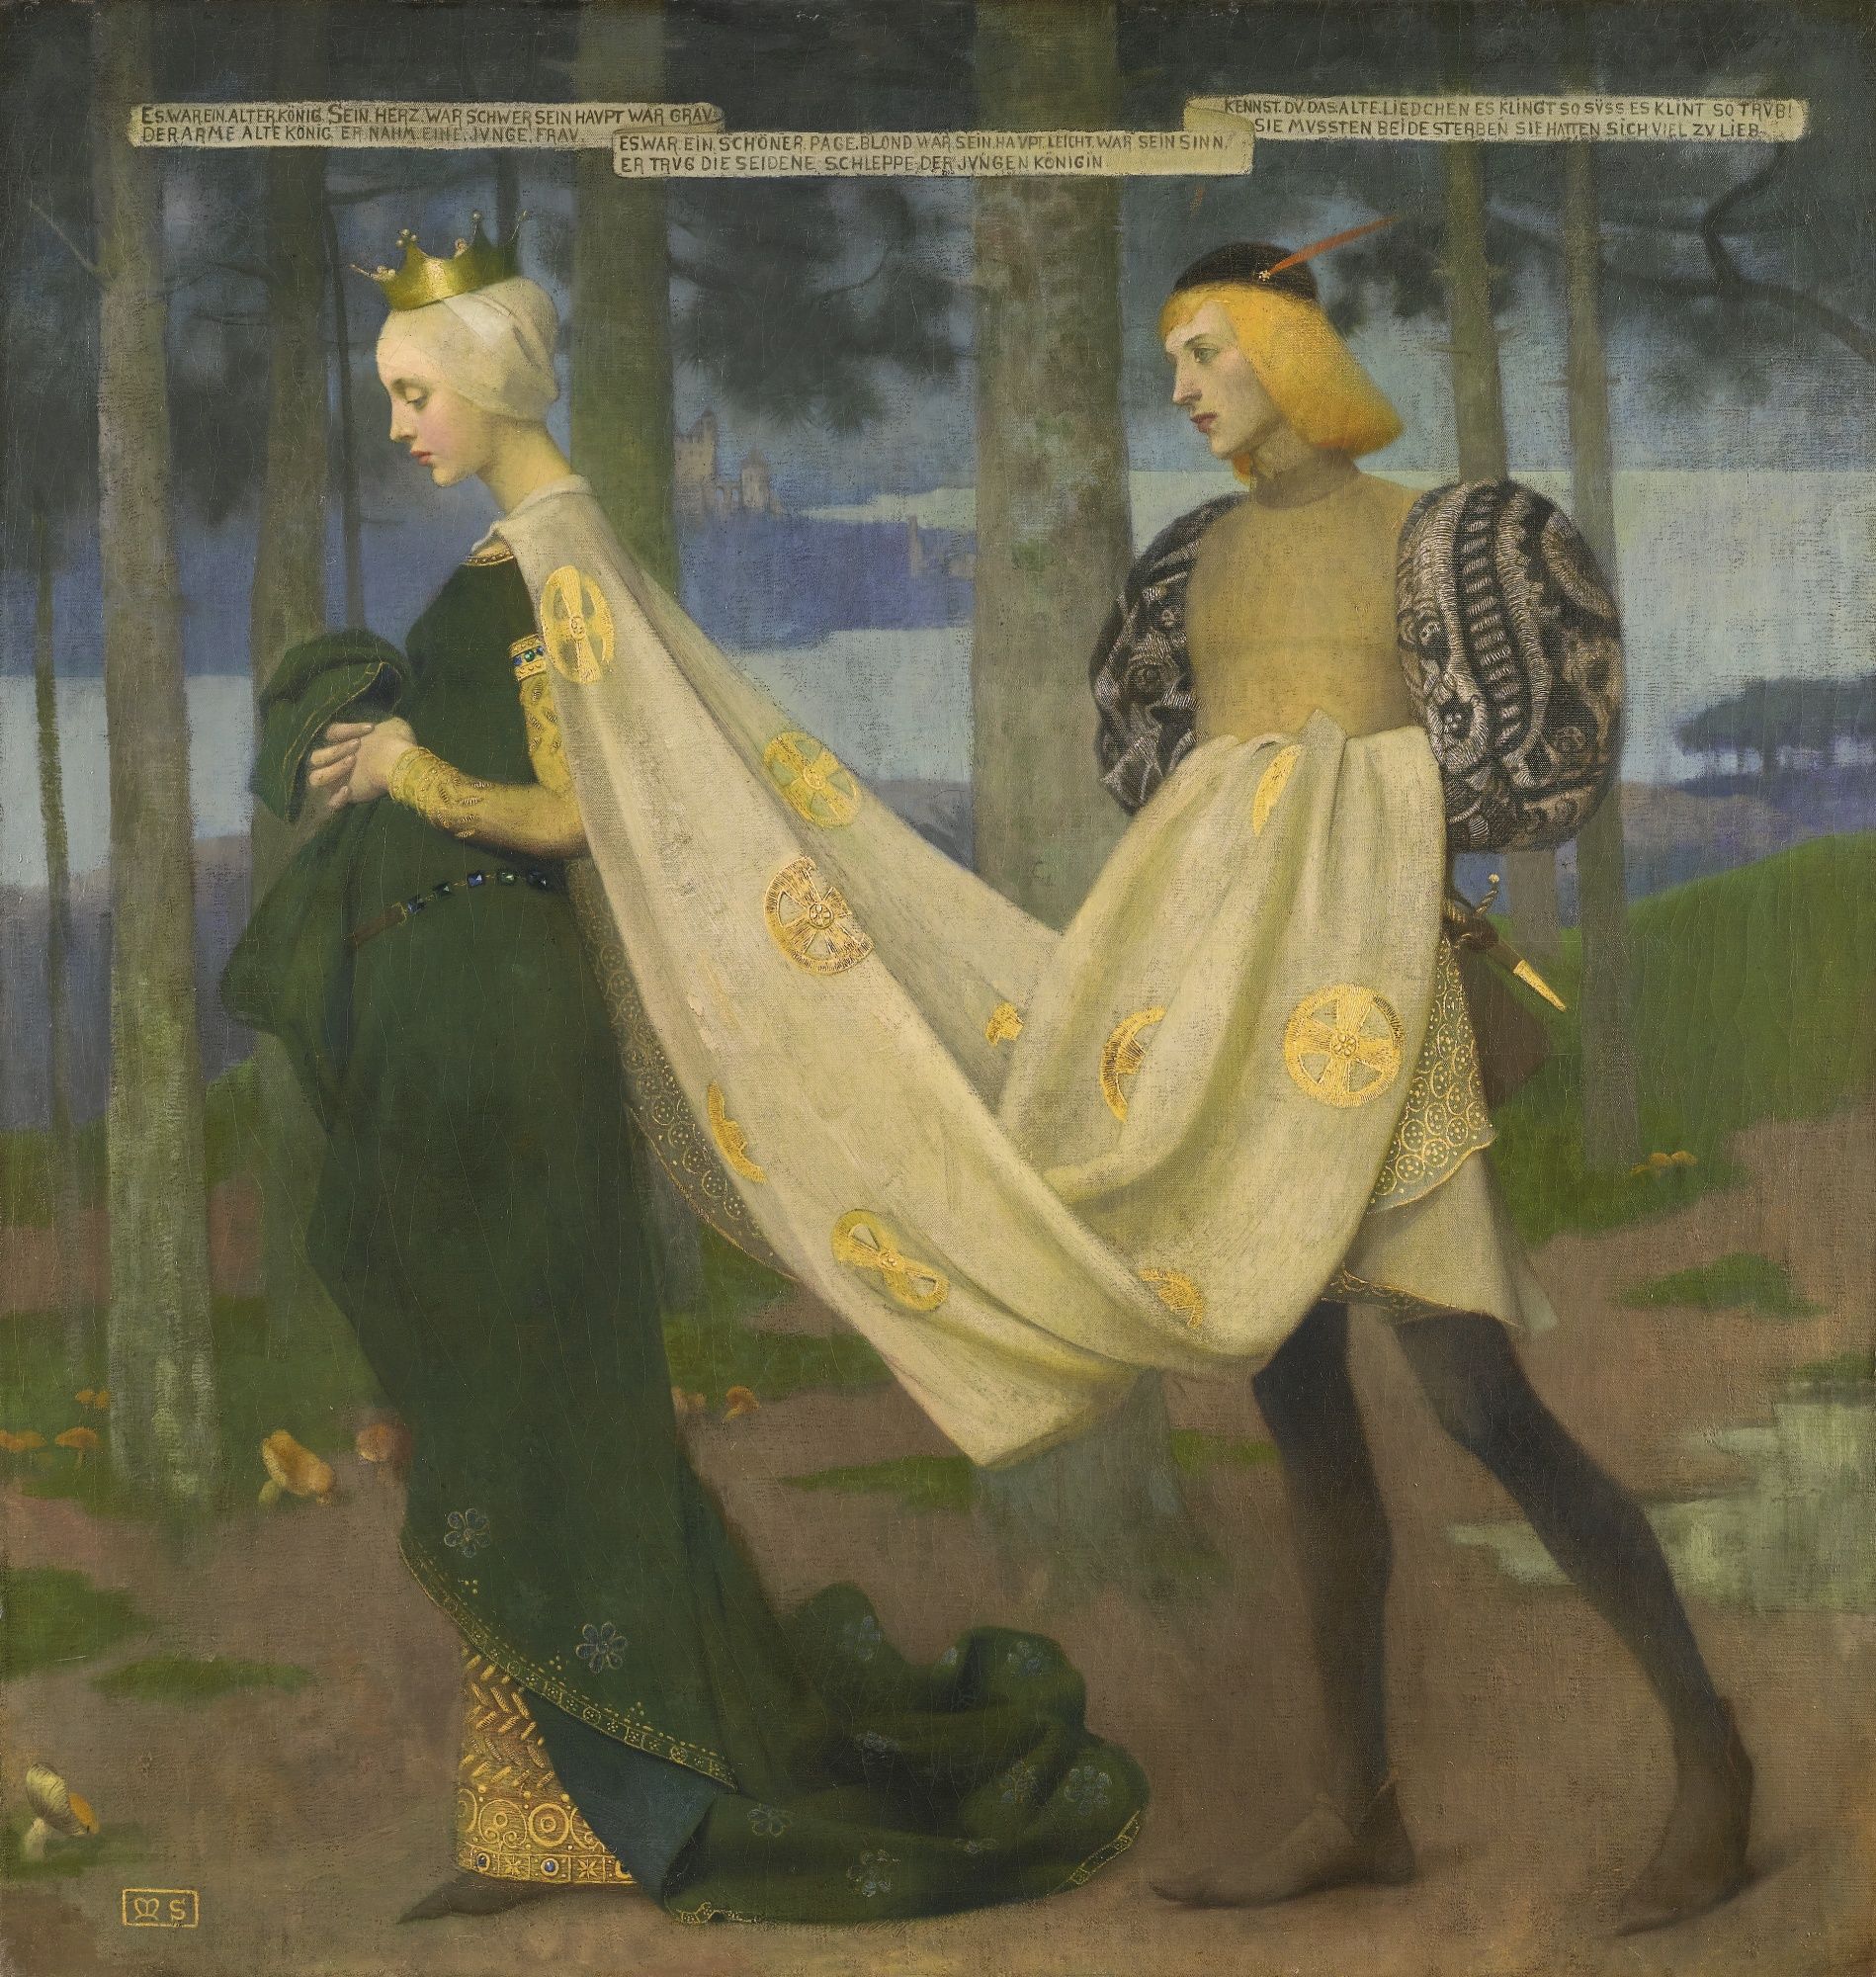 Regina și pajul by Marianne Stokes - 1896 - 101 x 96,5 cm 